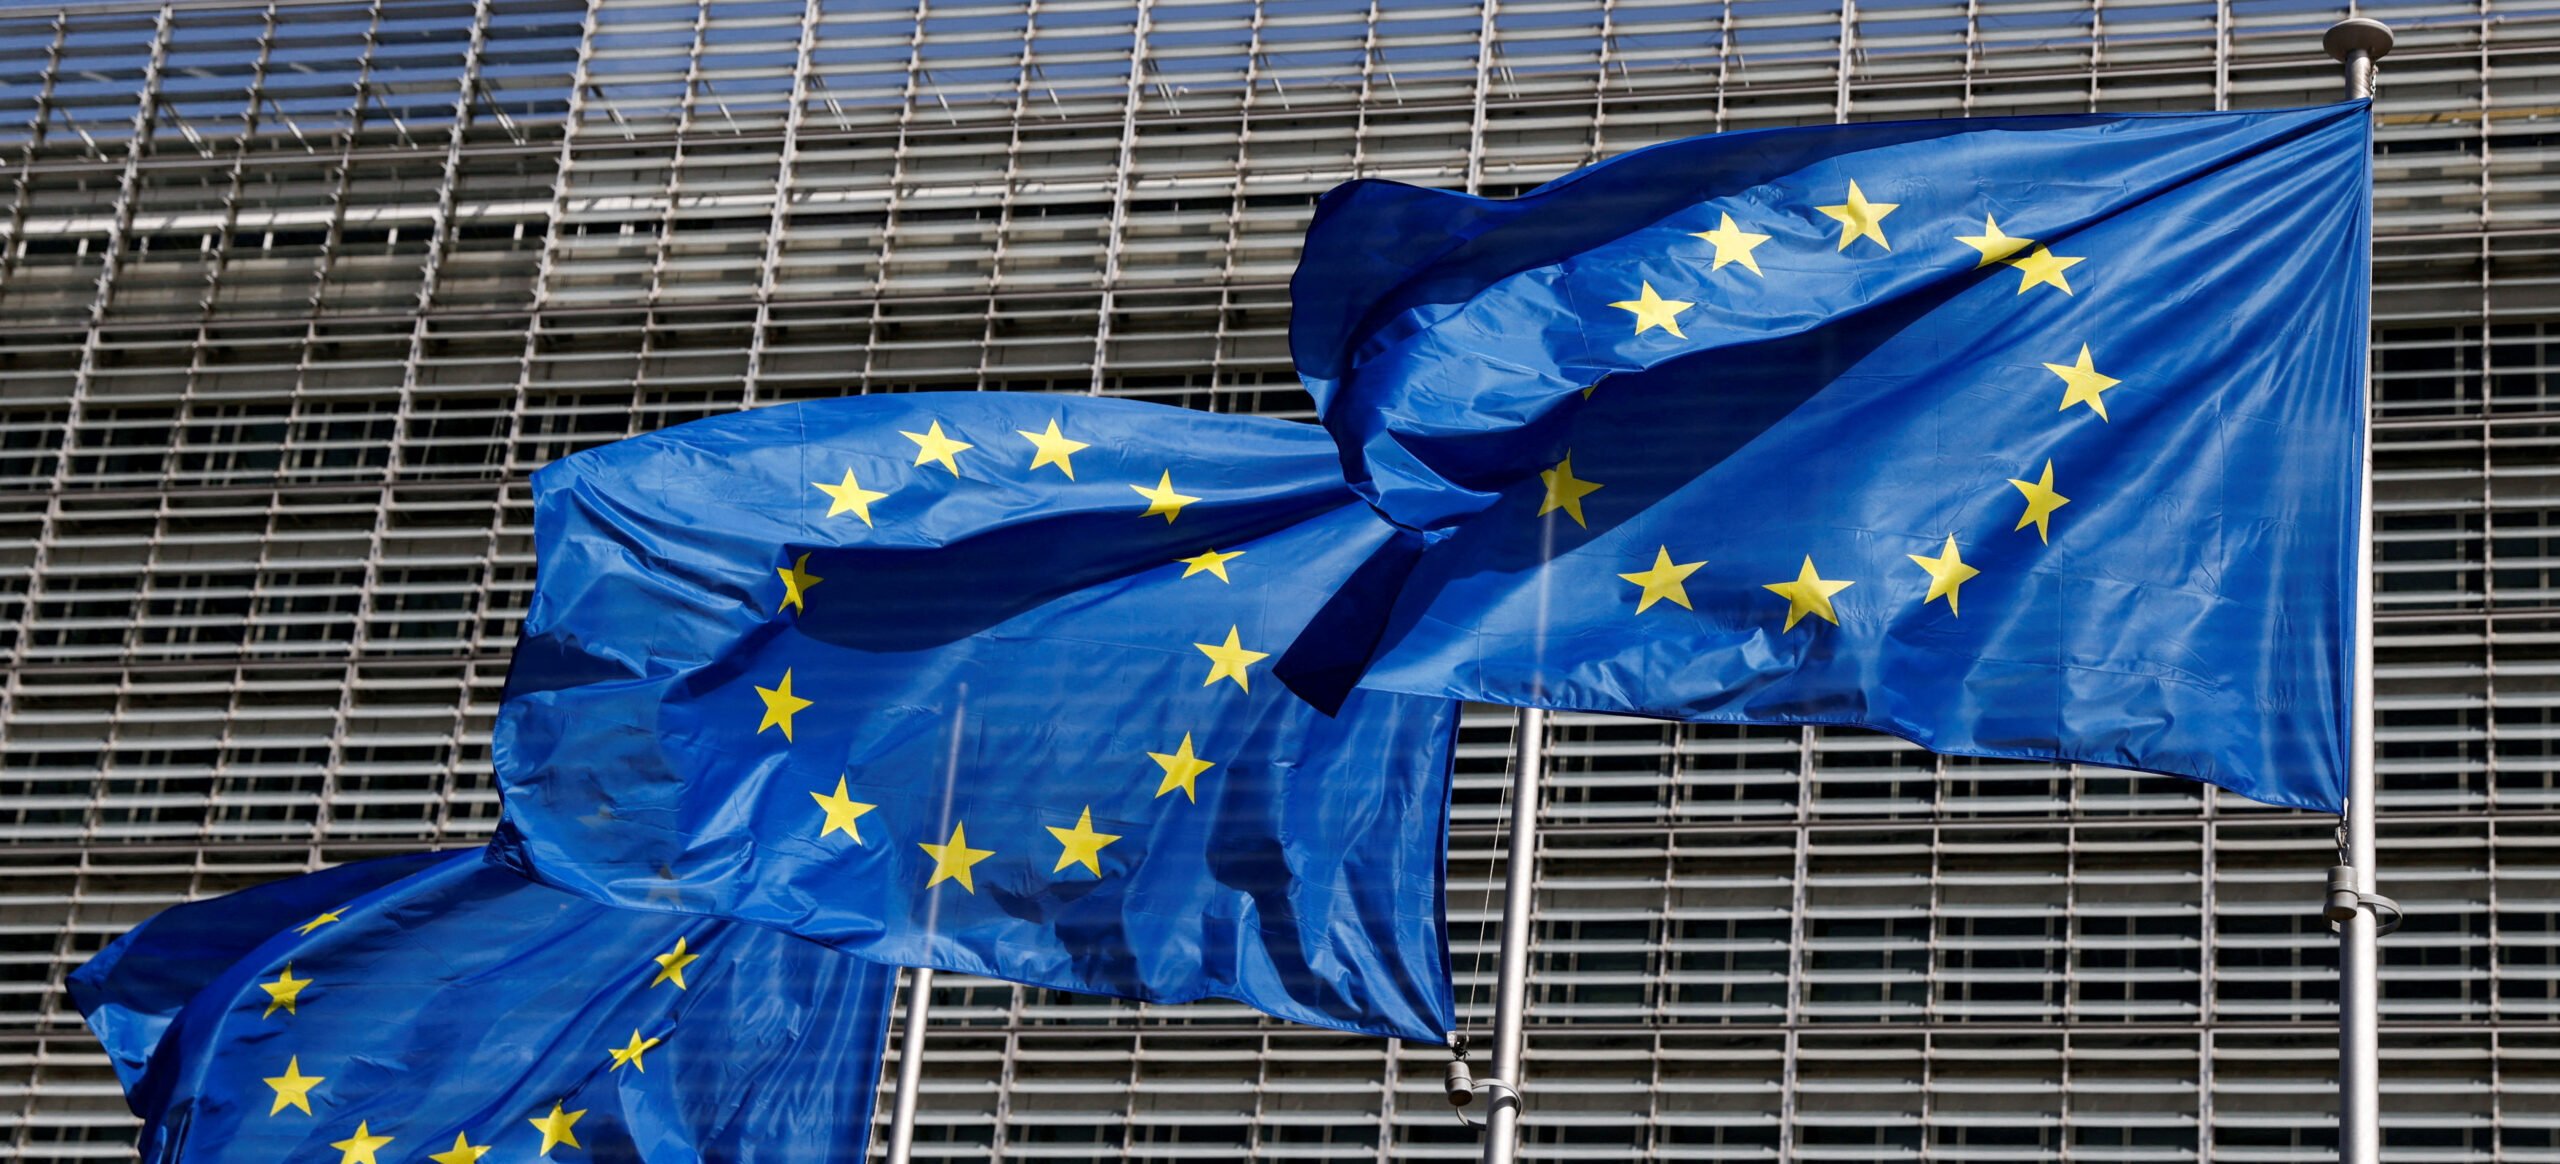 UWC welcomes EU’s decision to allocate €50 billion to Ukraine